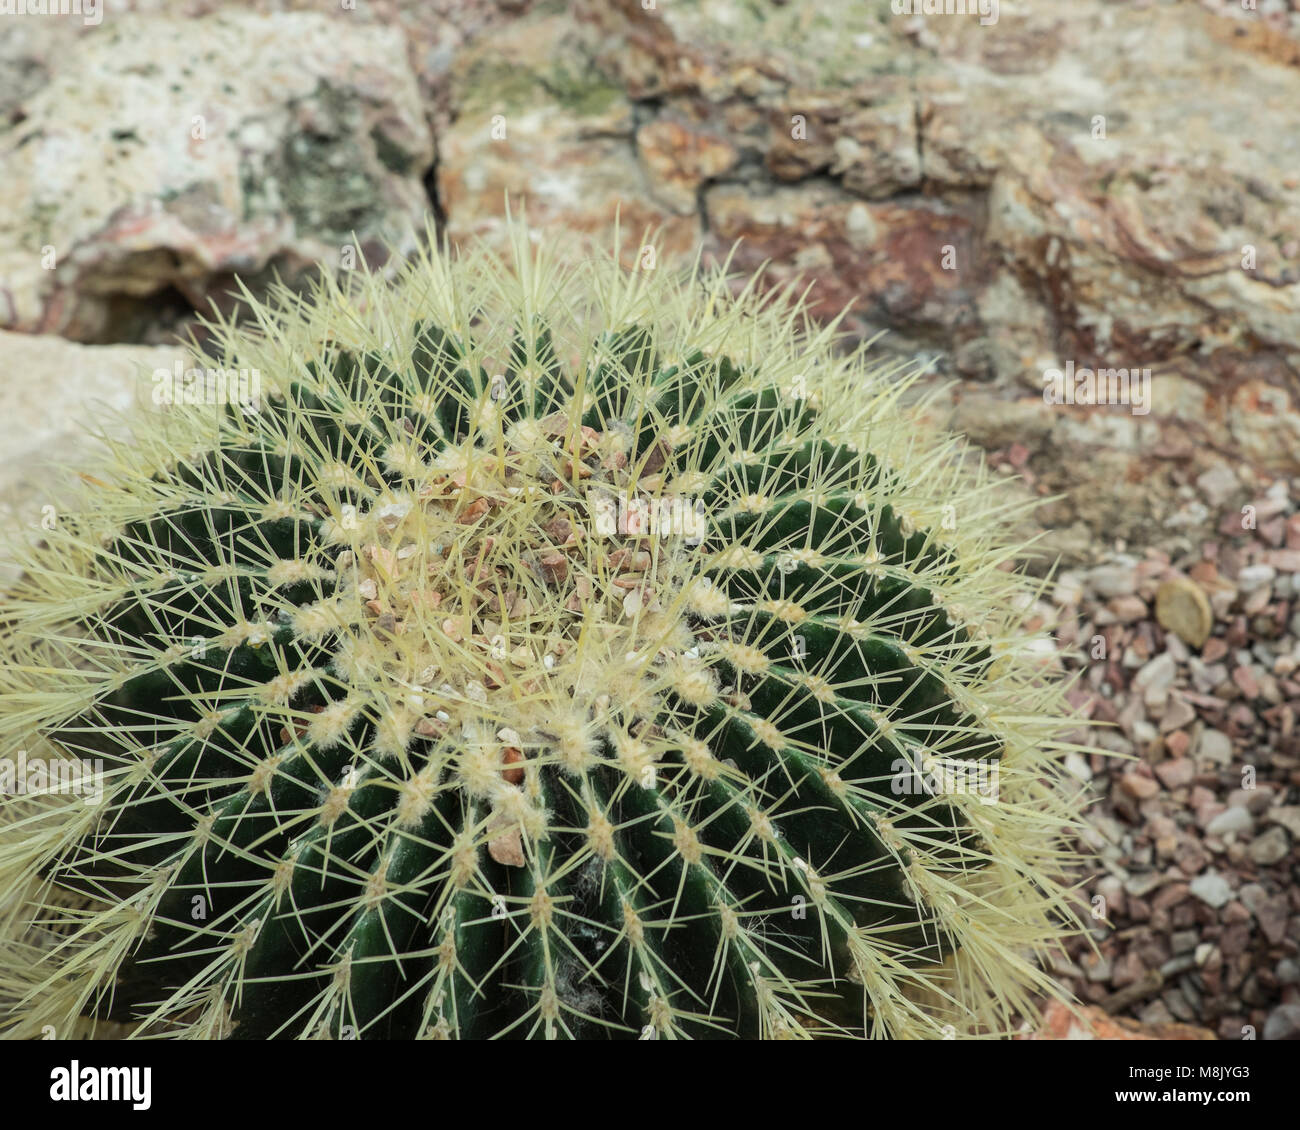 Golden barrel cactus,Echinocactus grusonii, in desert landscaping Stock Photo